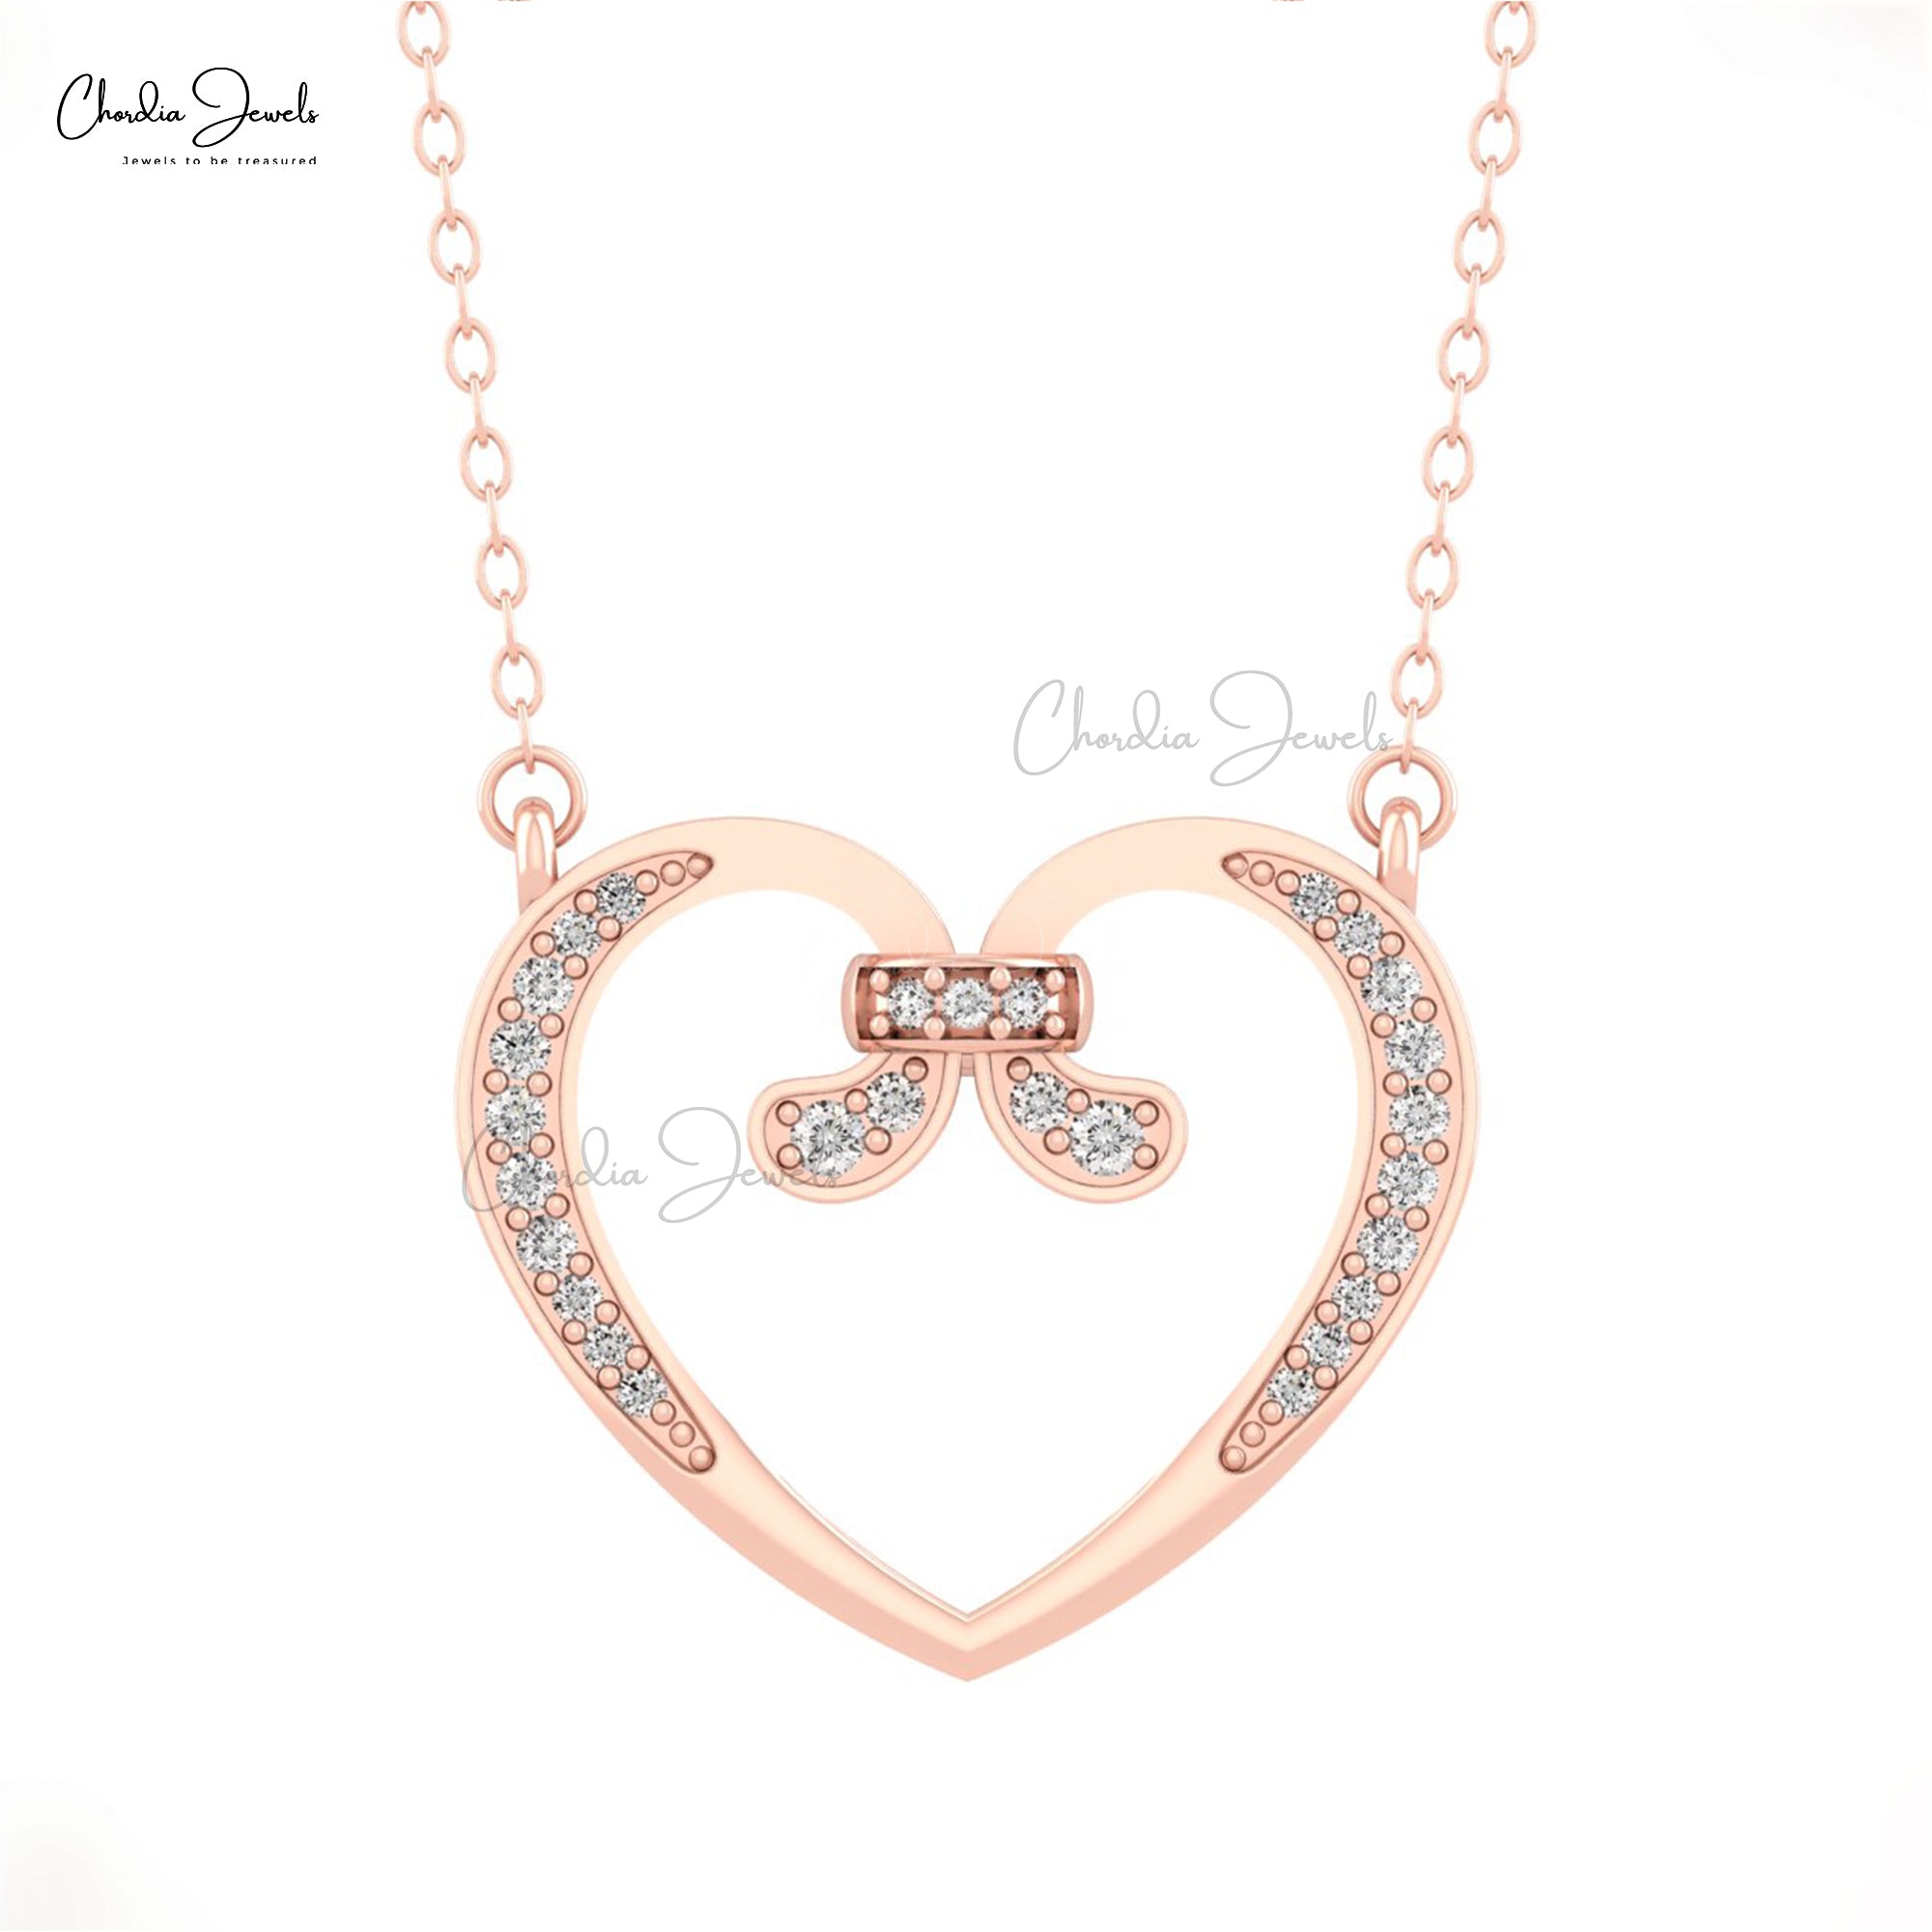 A sparkling Heart Diamond Necklace